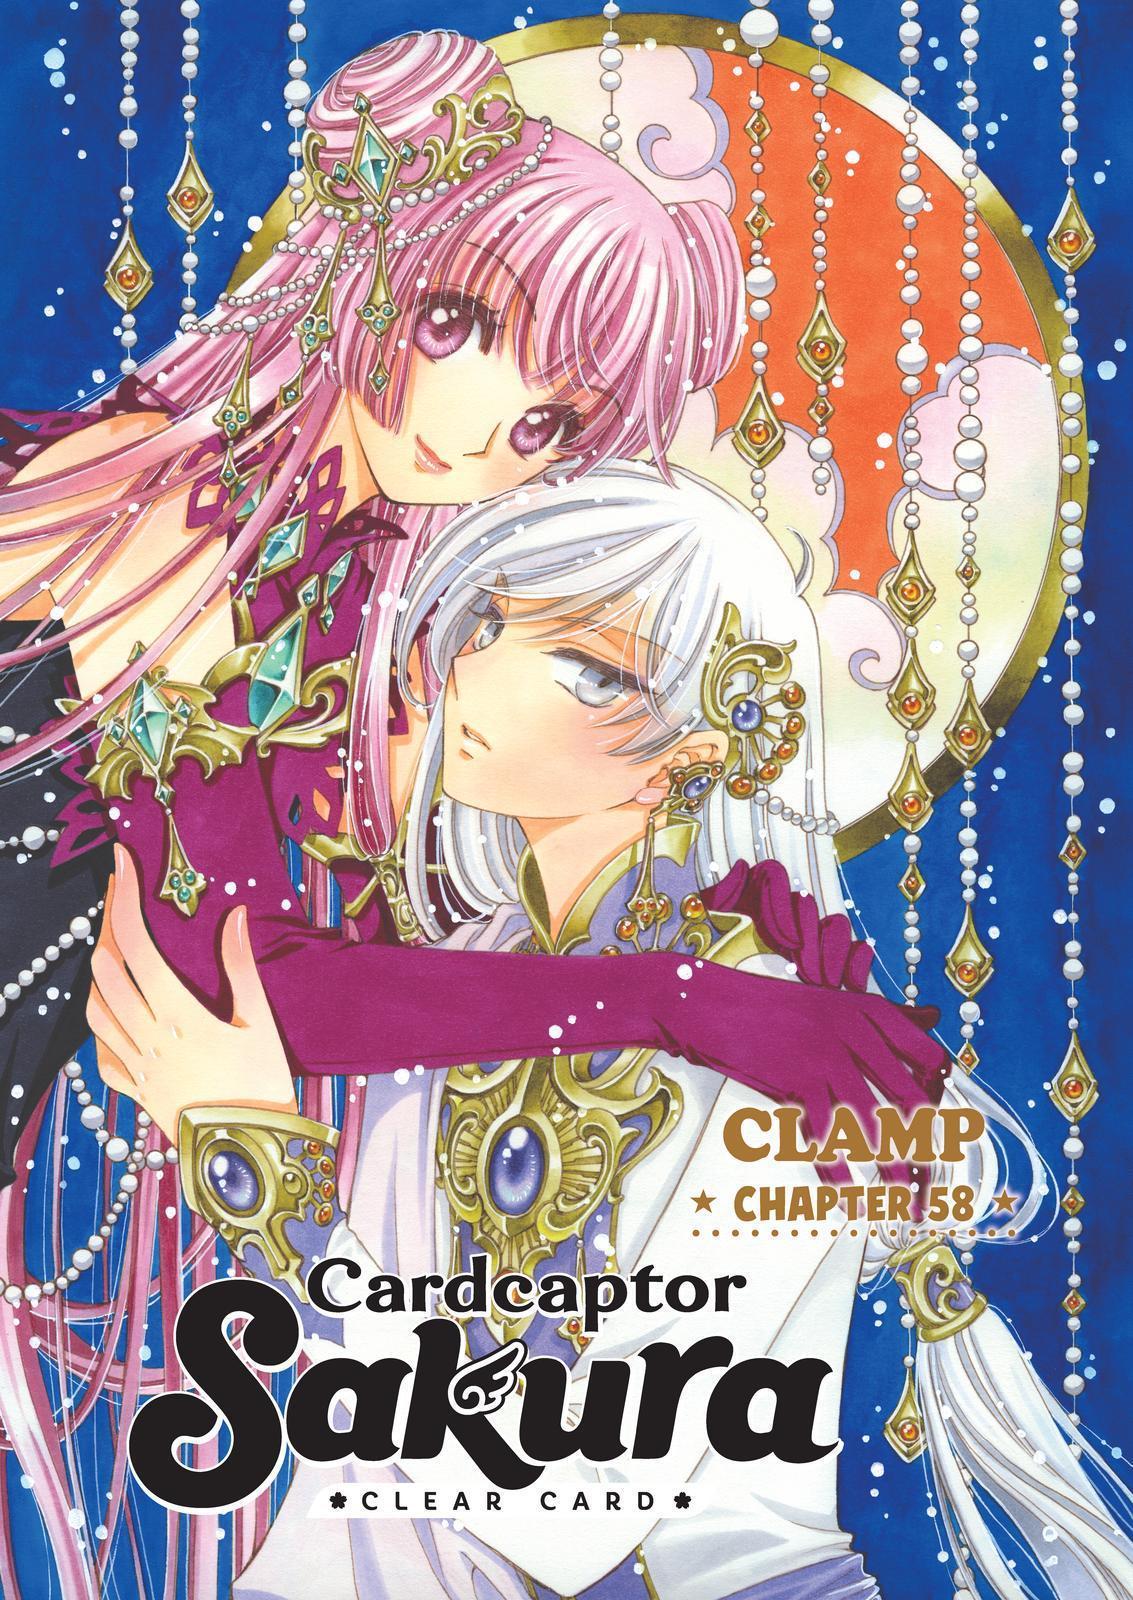 Card Captor Sakura – Clear Card arc – Chapter 72